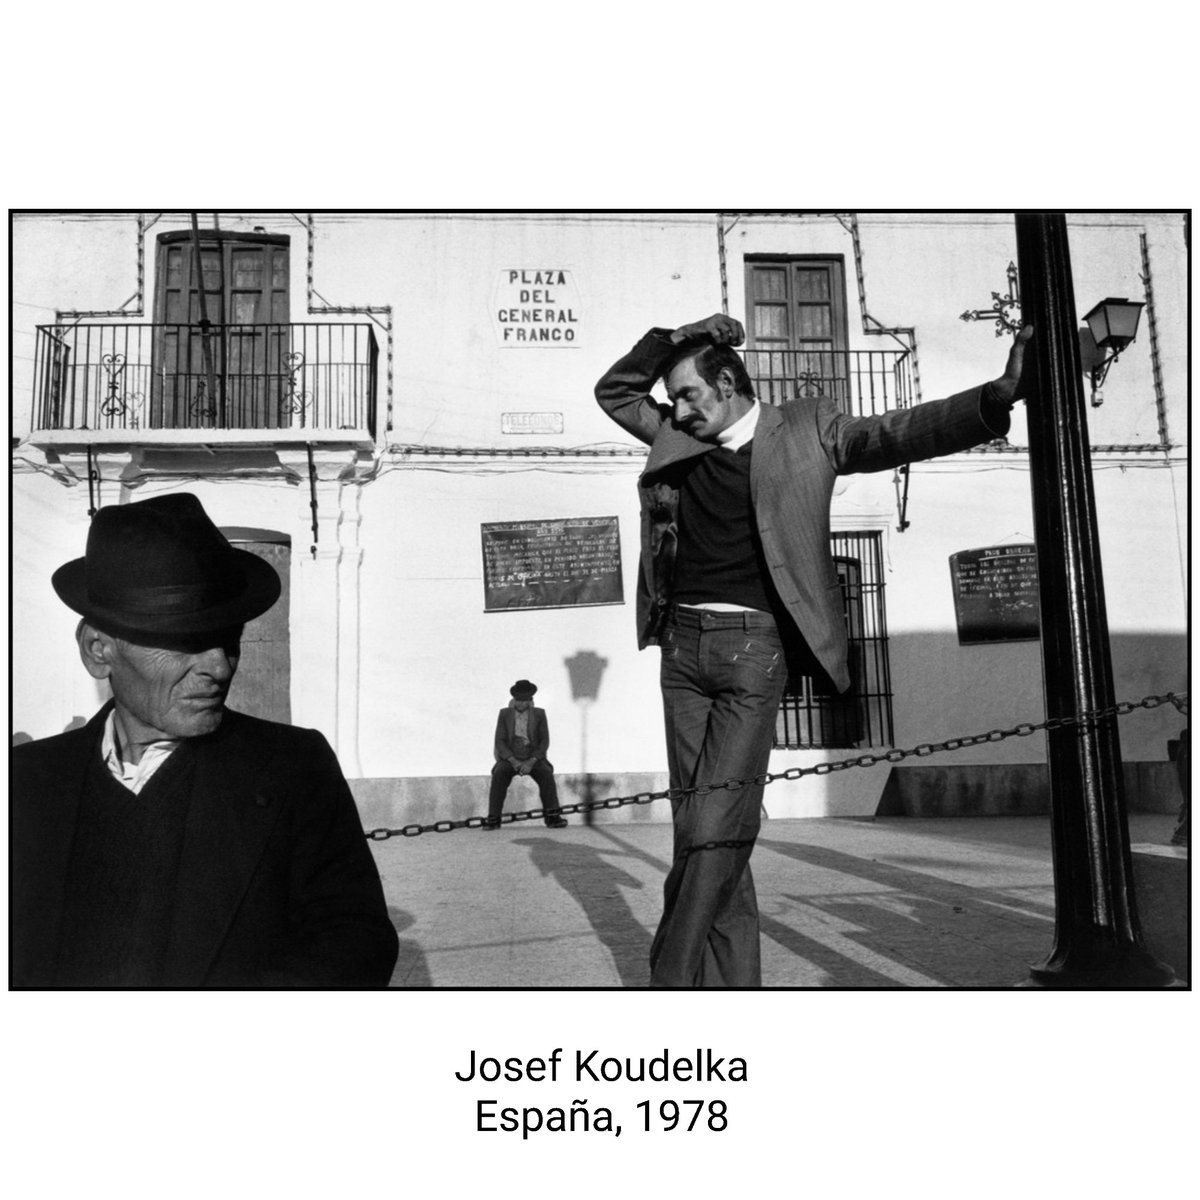 Josef Koudelka, España 1978. #Analogphotography #FotografiaAnaloga